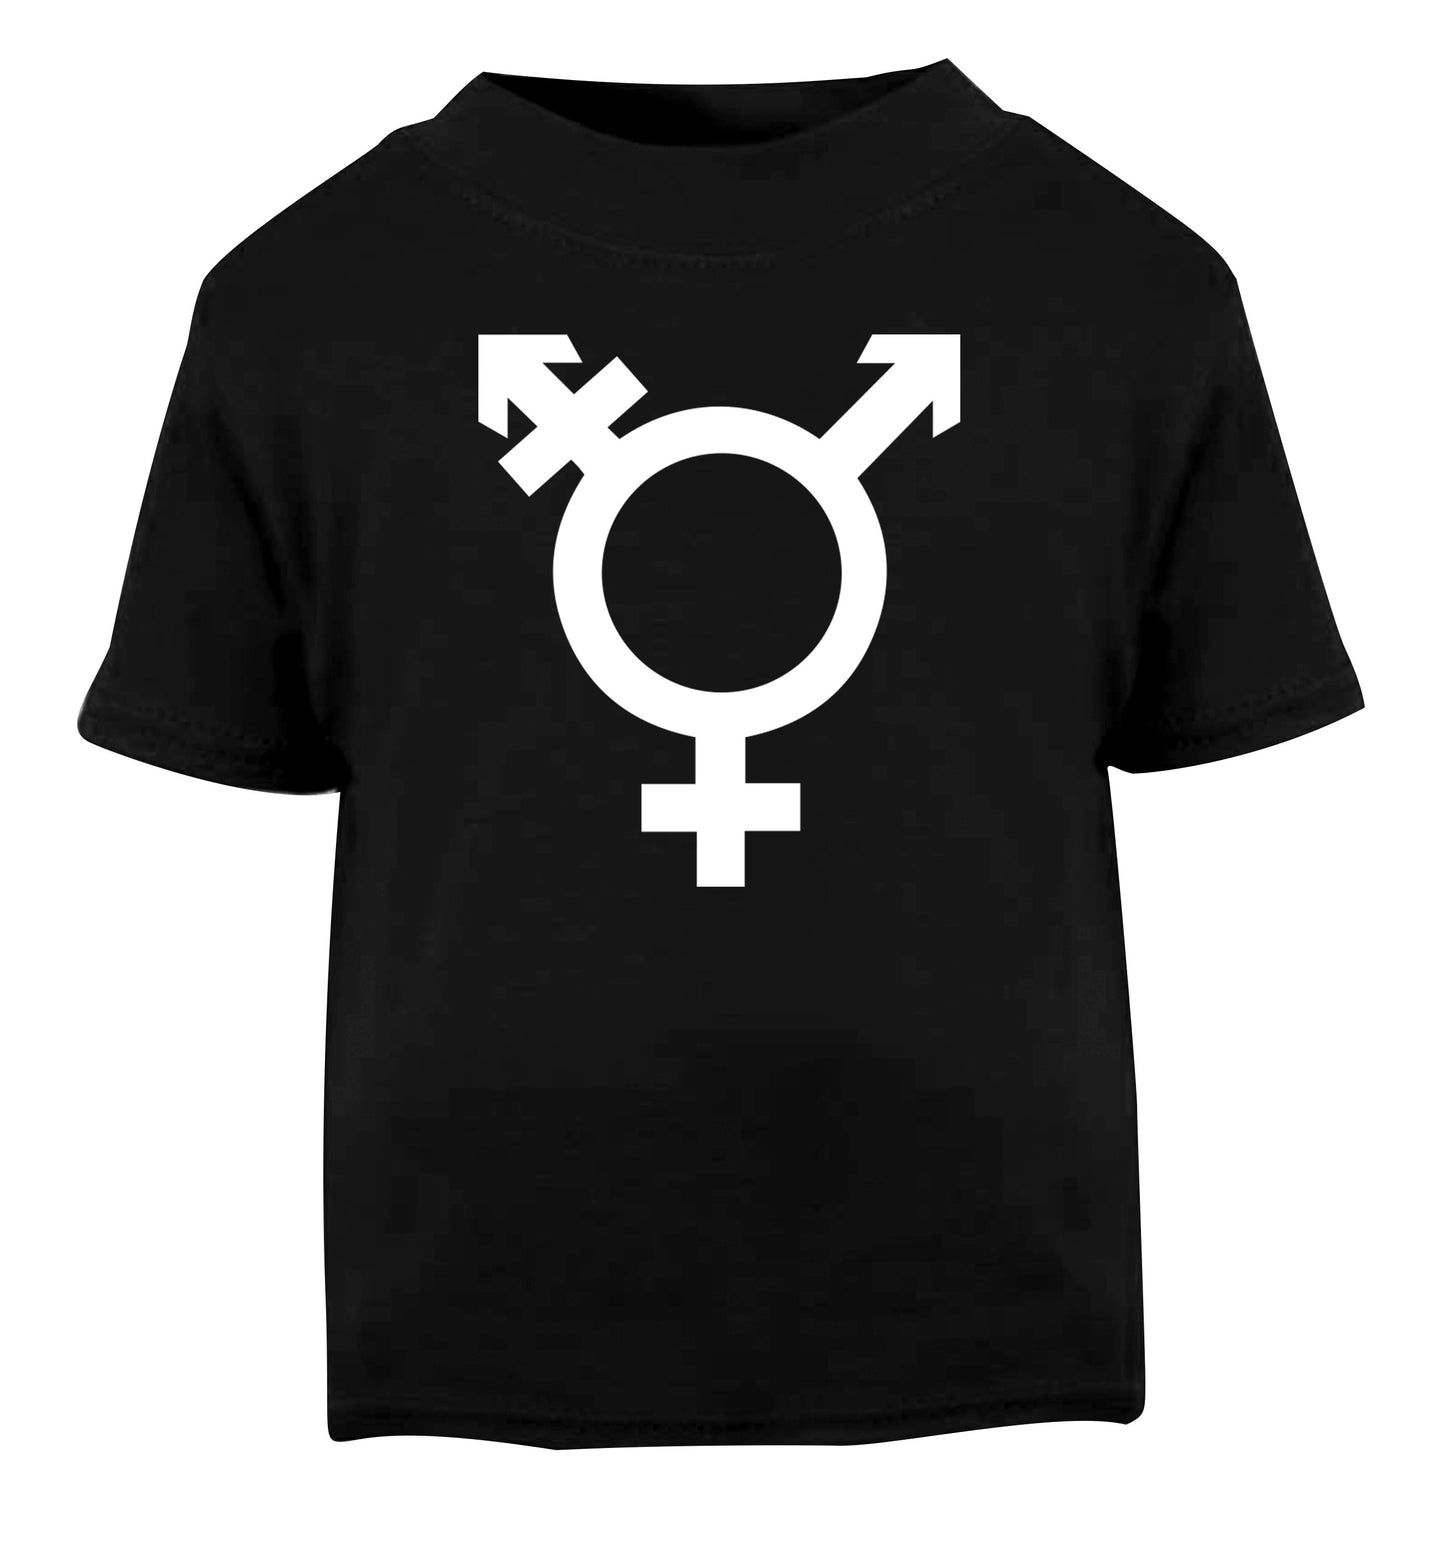 Gender neutral symbol large Black Baby Toddler Tshirt 2 years